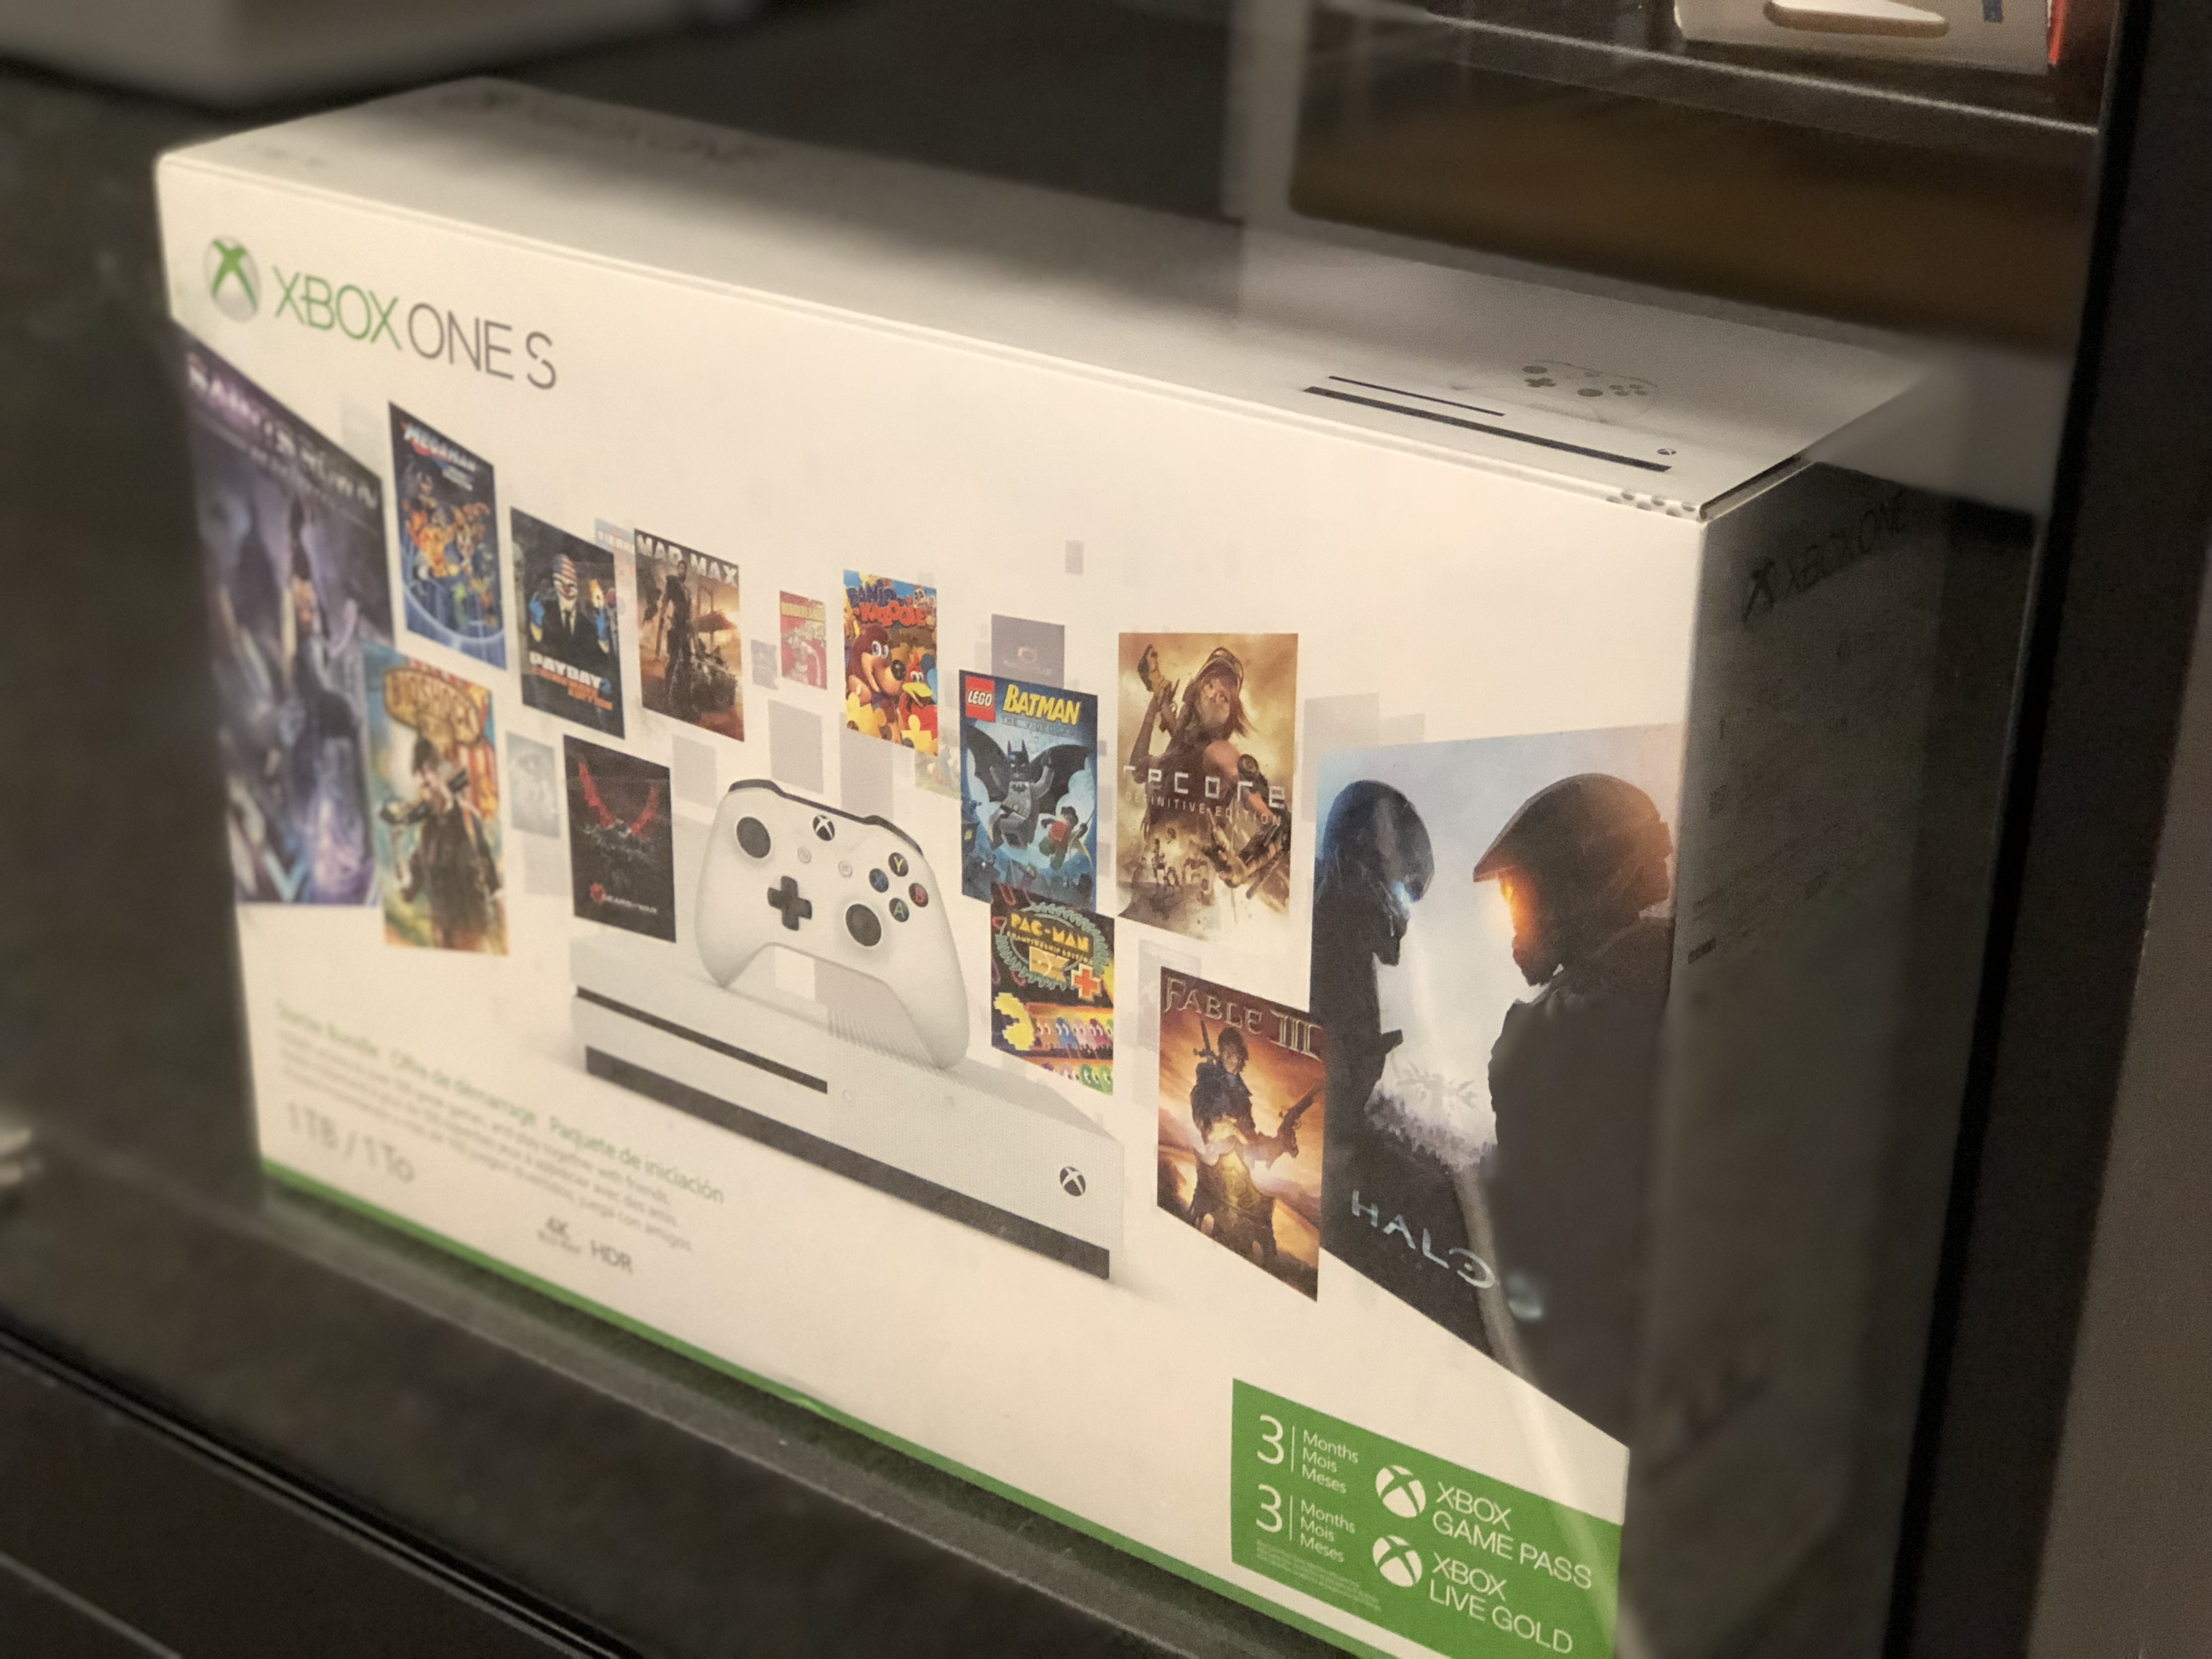 15 best kohls black friday 2018 deals - Xbox One S 1TB at Kohl's